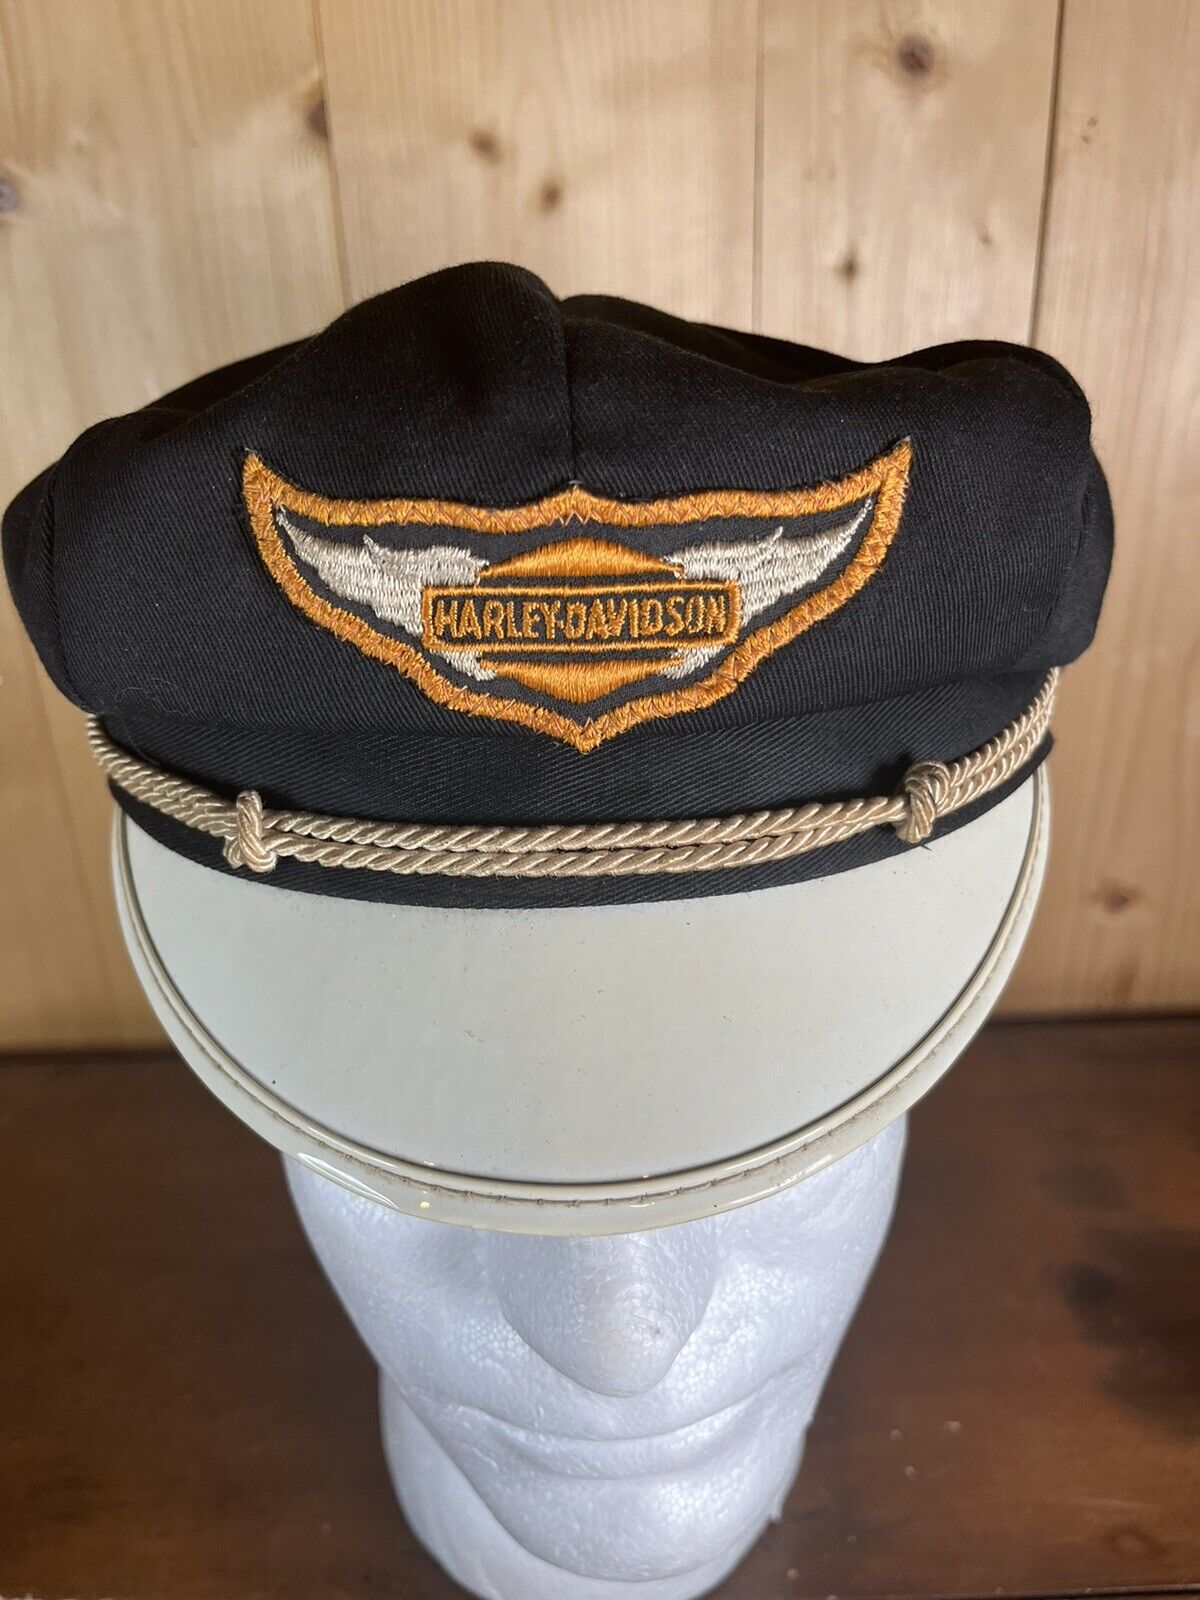 Vintage 40’s 50s Harley Davidson Motorcycle cap hat Size 5 7/8.